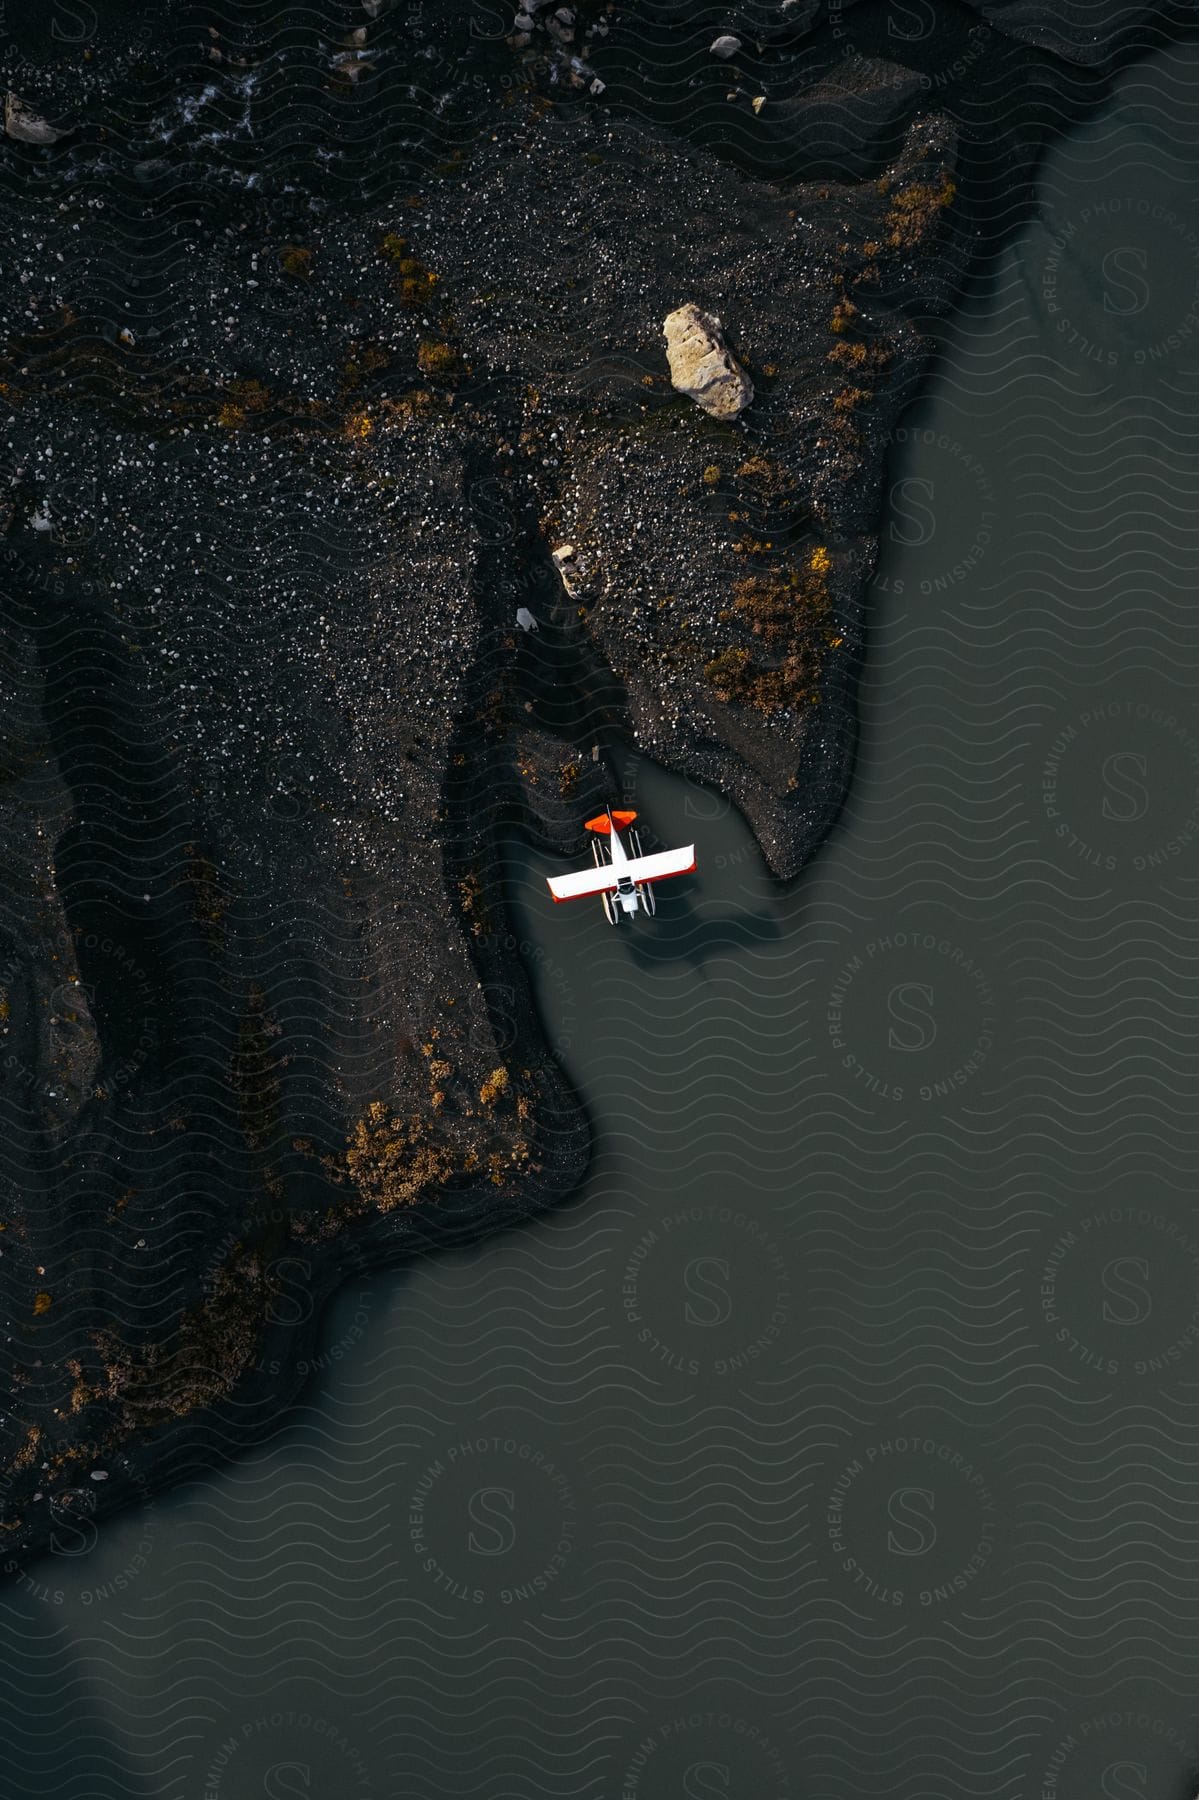 Prop plane parked on a shoreline